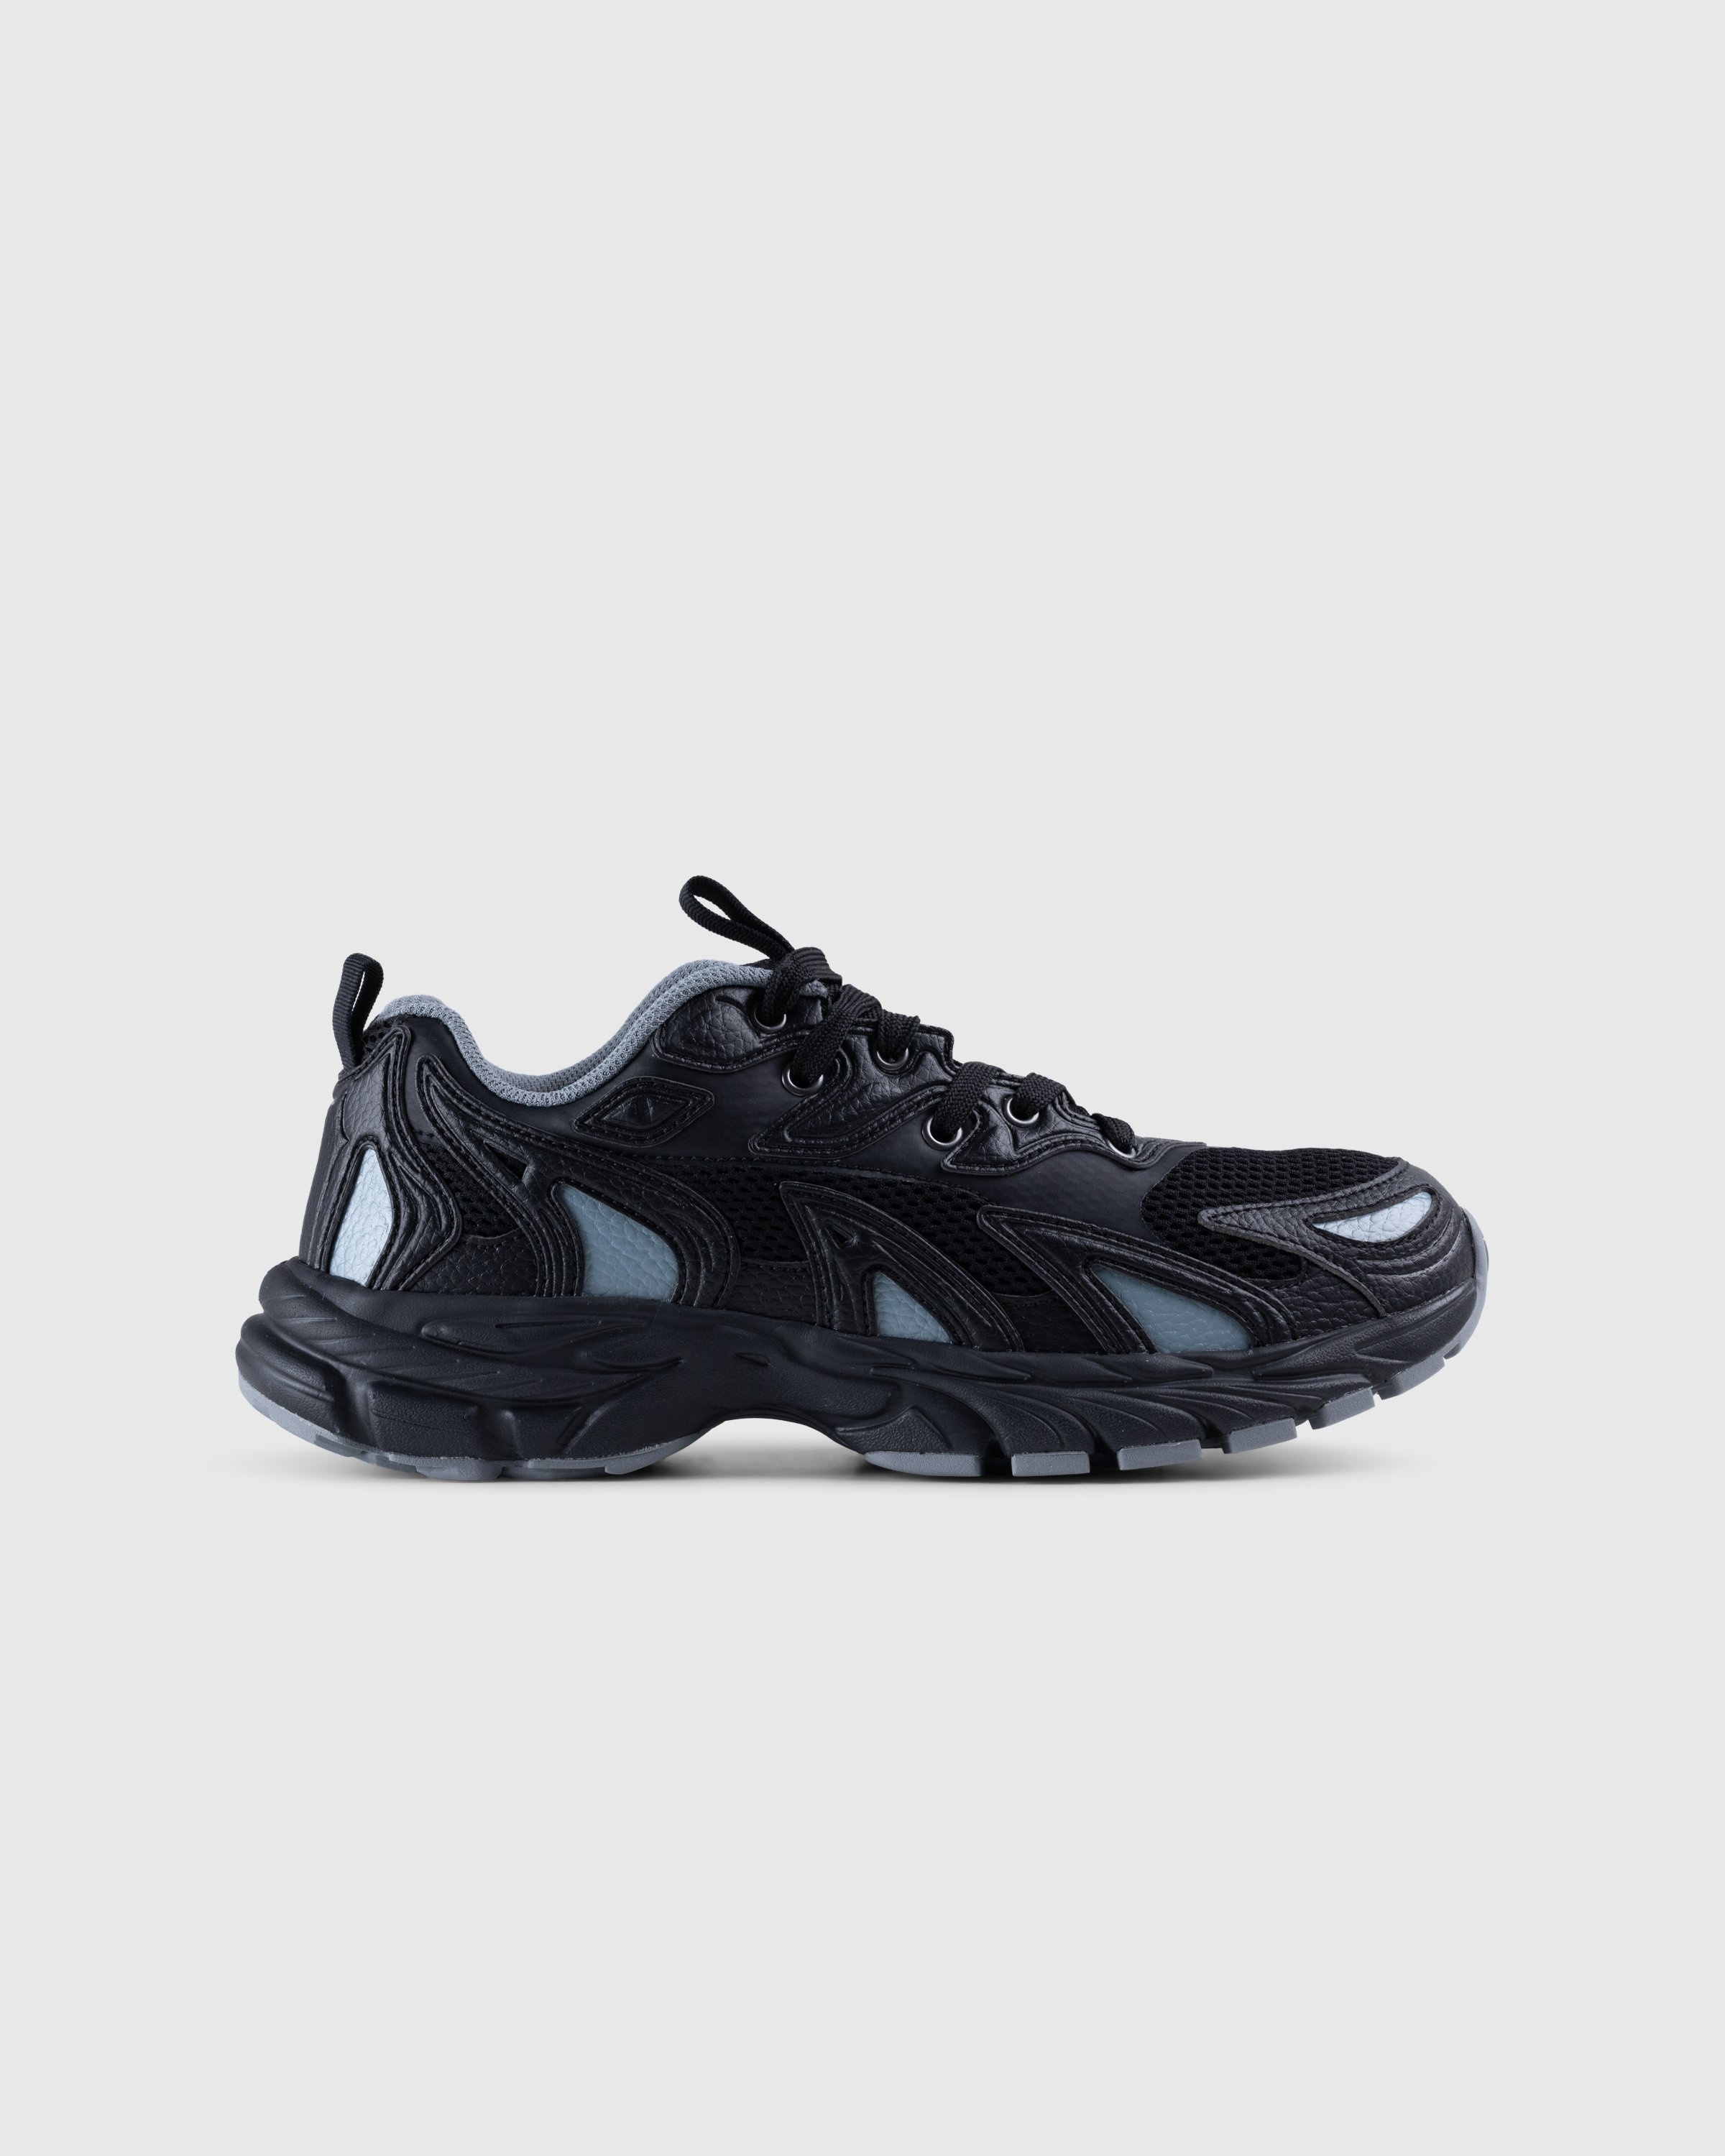 Trussardi – Retro Runner Sneaker - Sneakers - Black - Image 1